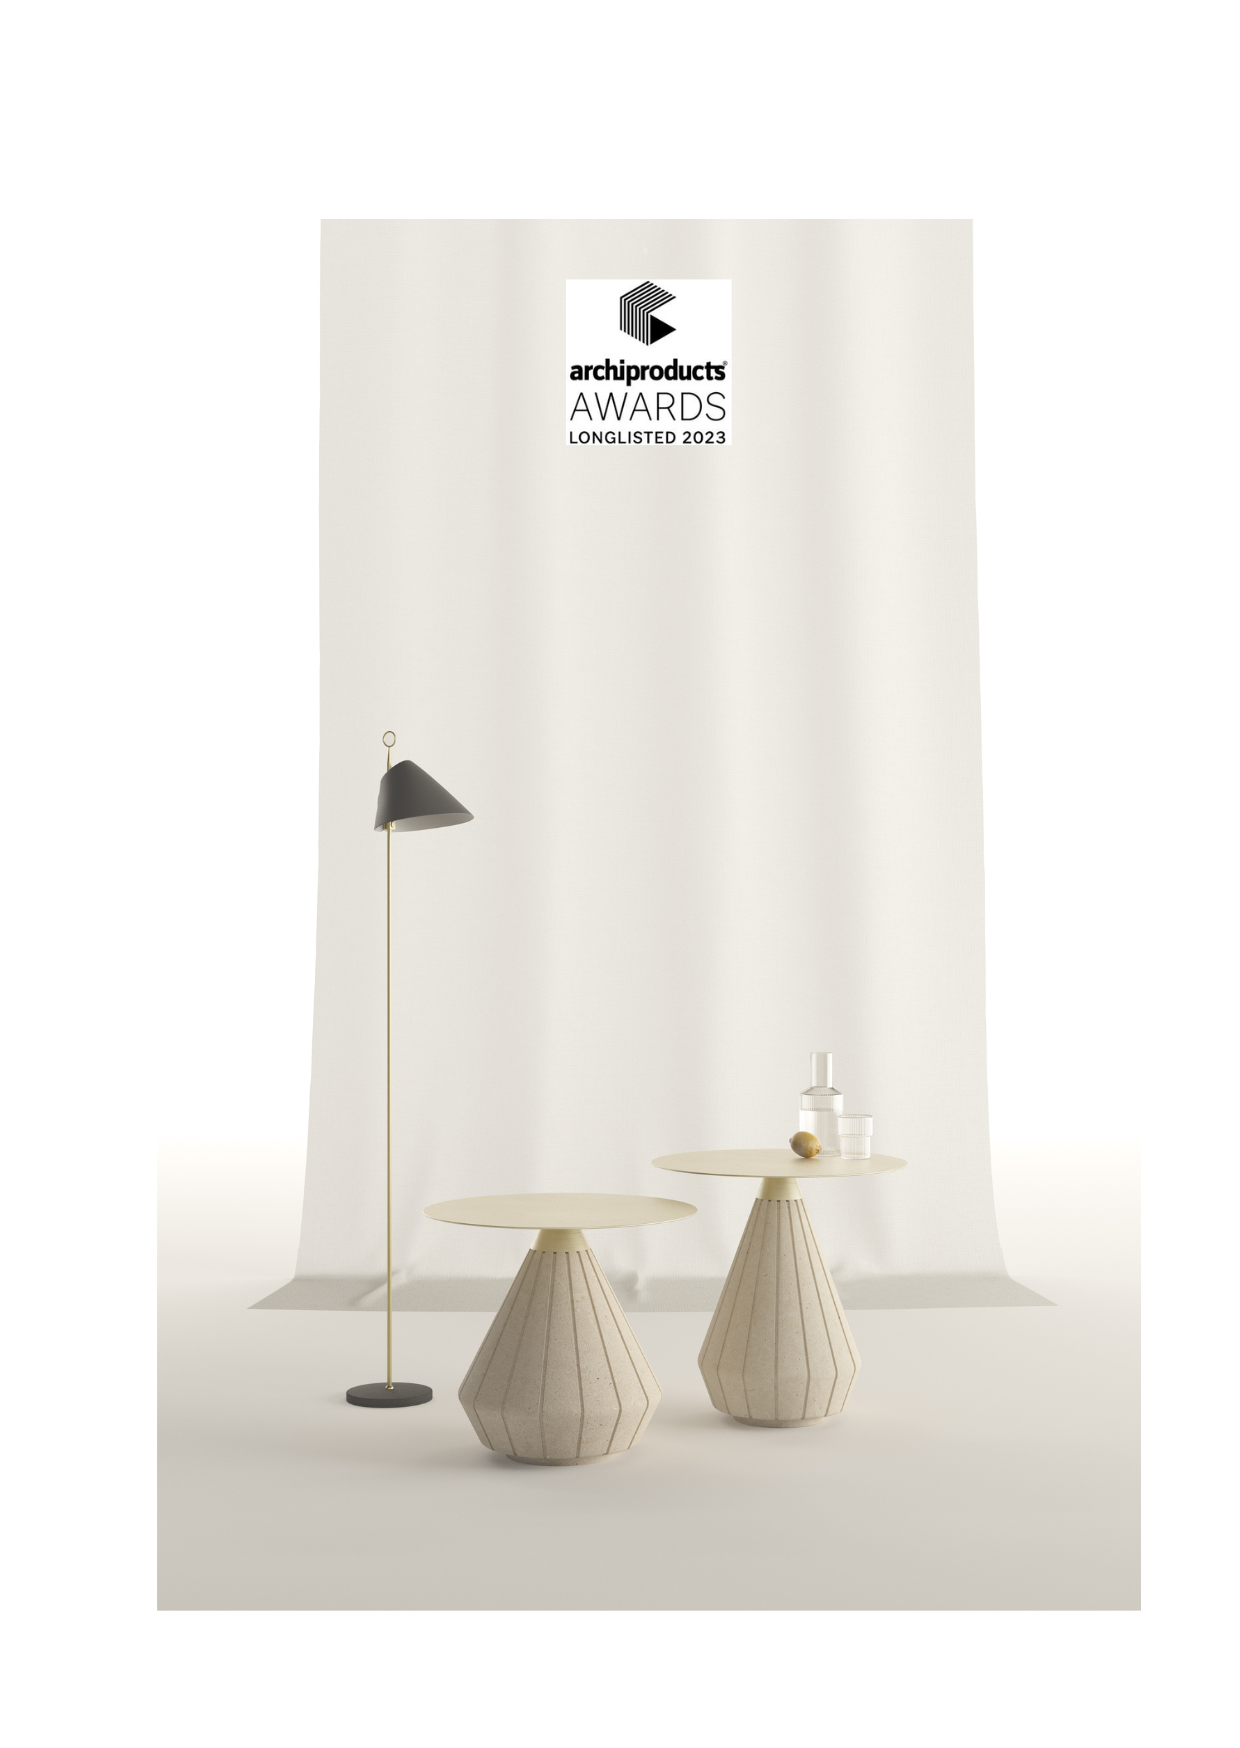 Rigo Coffe Table by Apospersano longlisted Archiproduct Design Awards 2023!